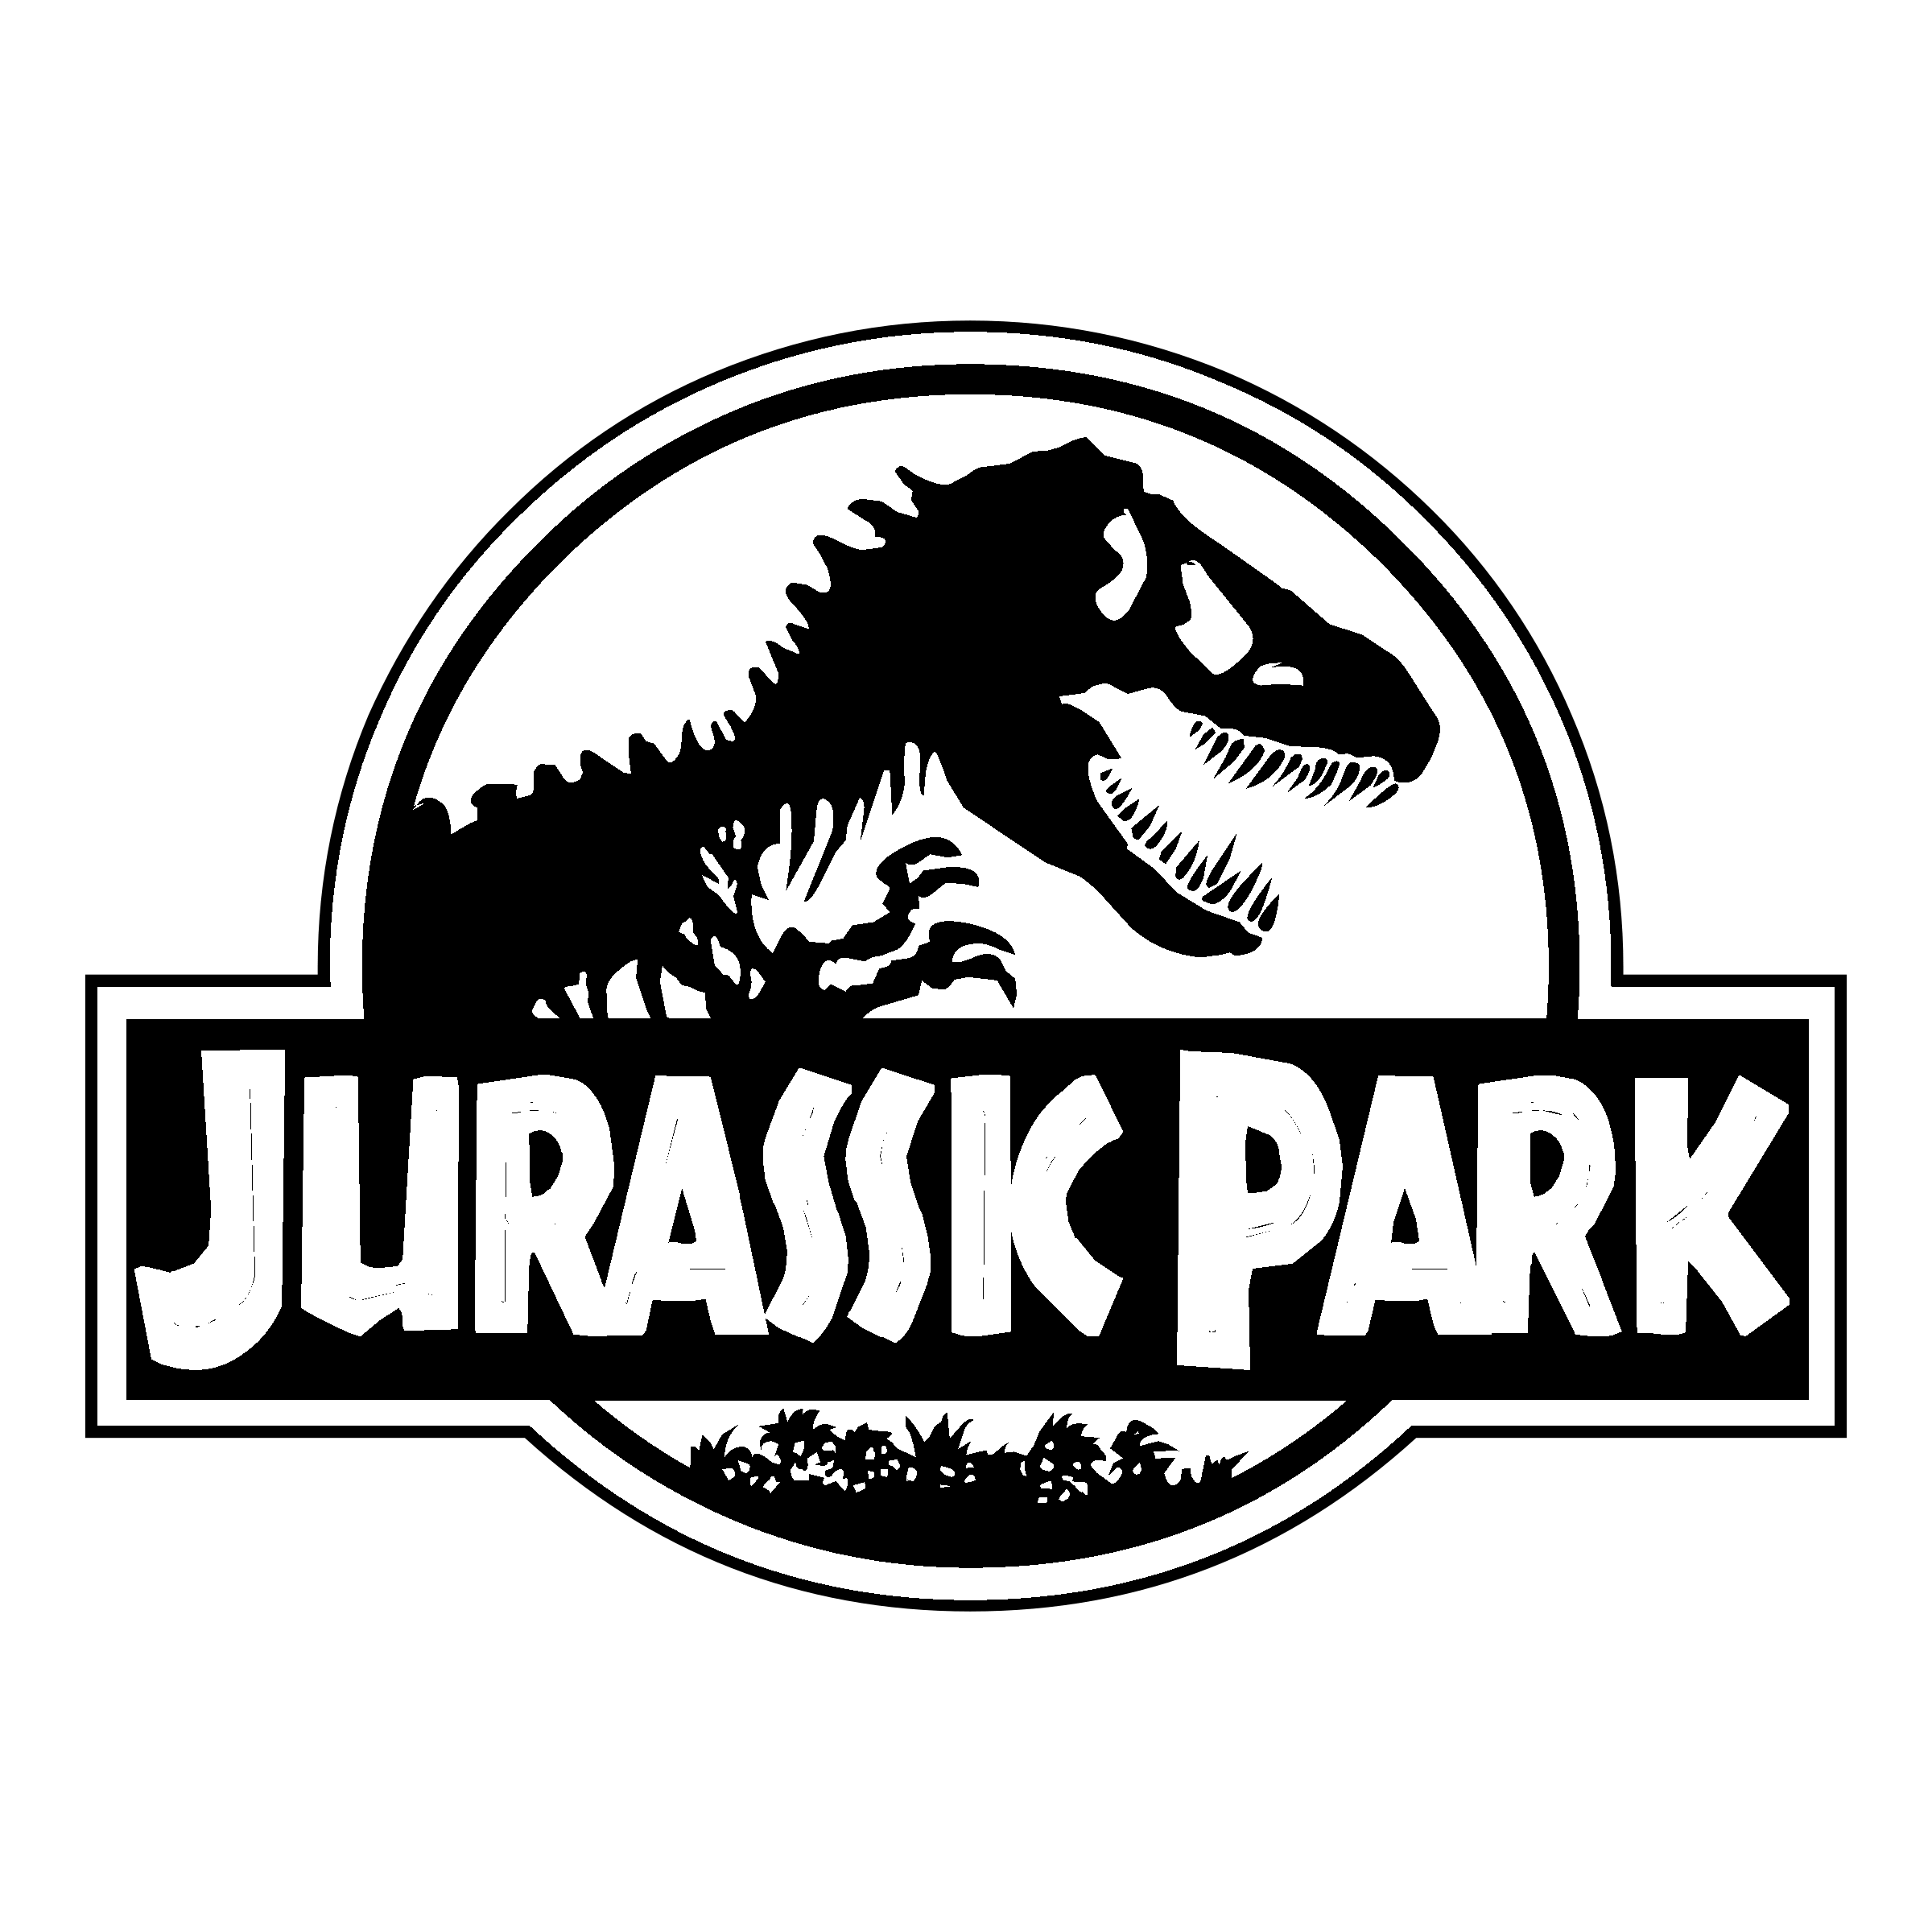 Jurassic Park Black and White Logo - Jurassic Park Logo Black And White. Cricut. Jurassic